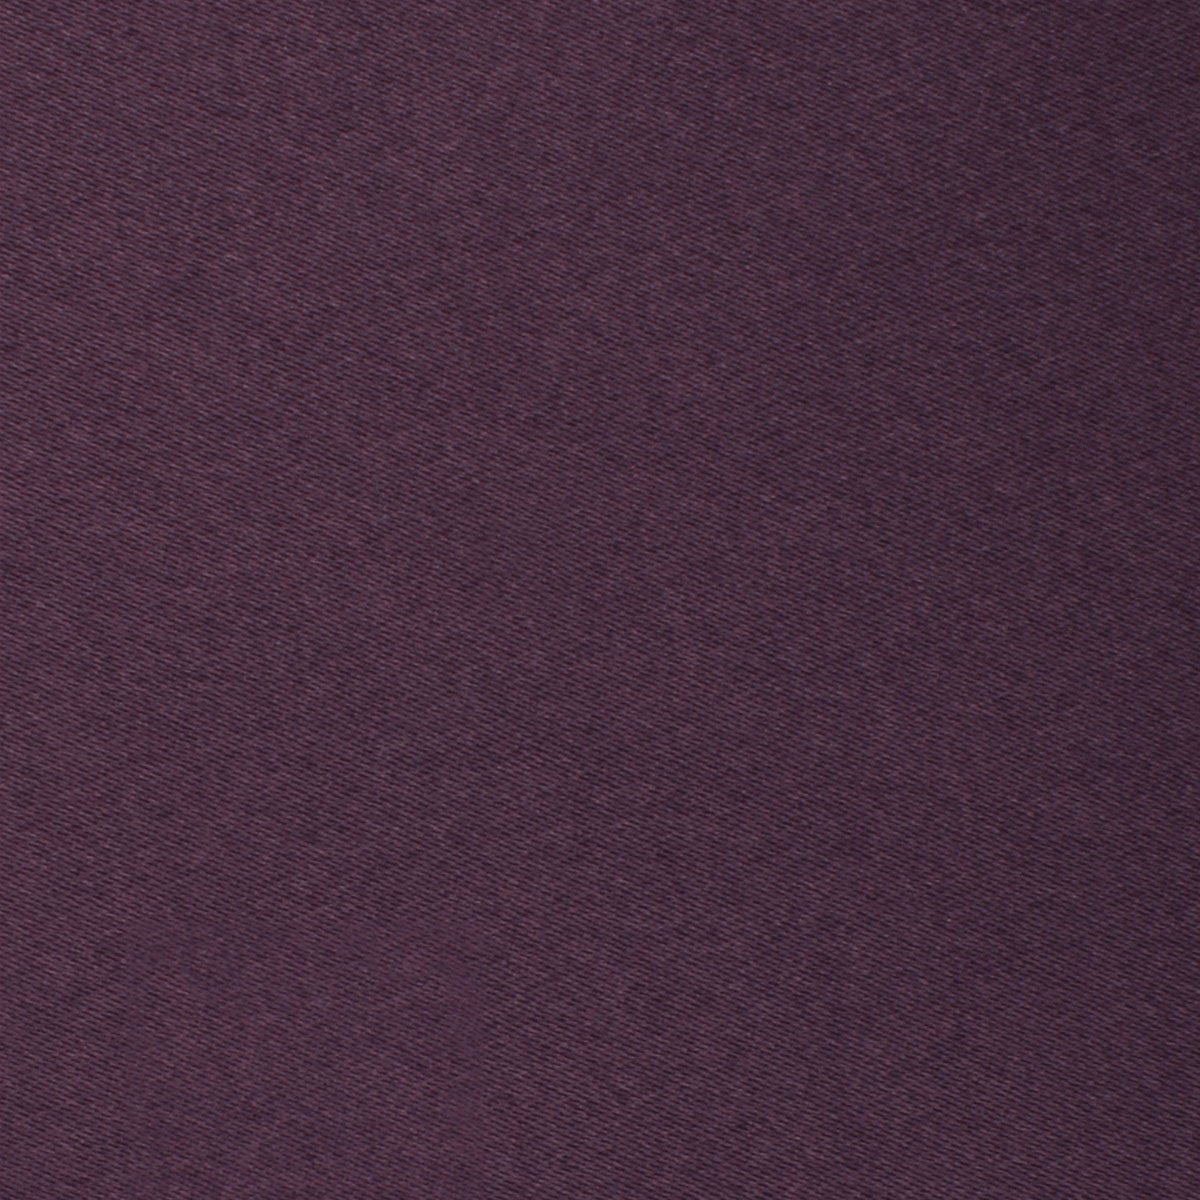 Aubergine Purple Satin Skinny Tie Fabric